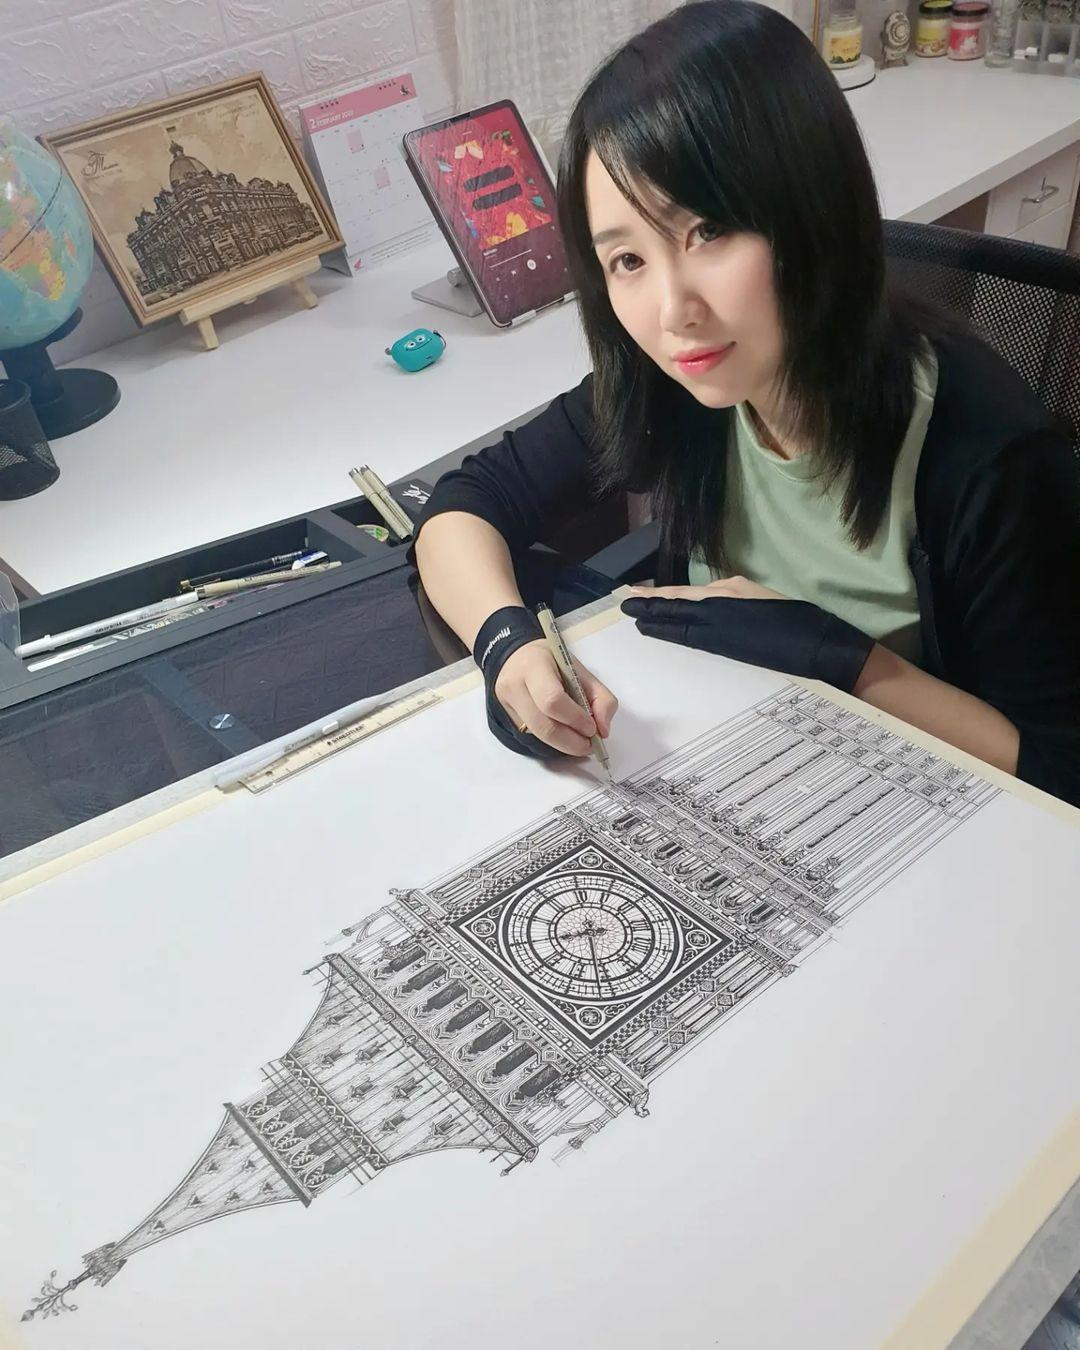 Emi Nakajima drawing London's Big Ben. (Courtesy of <a href="https://www.instagram.com/emi_nkjm/">Emi Nakajima</a>)